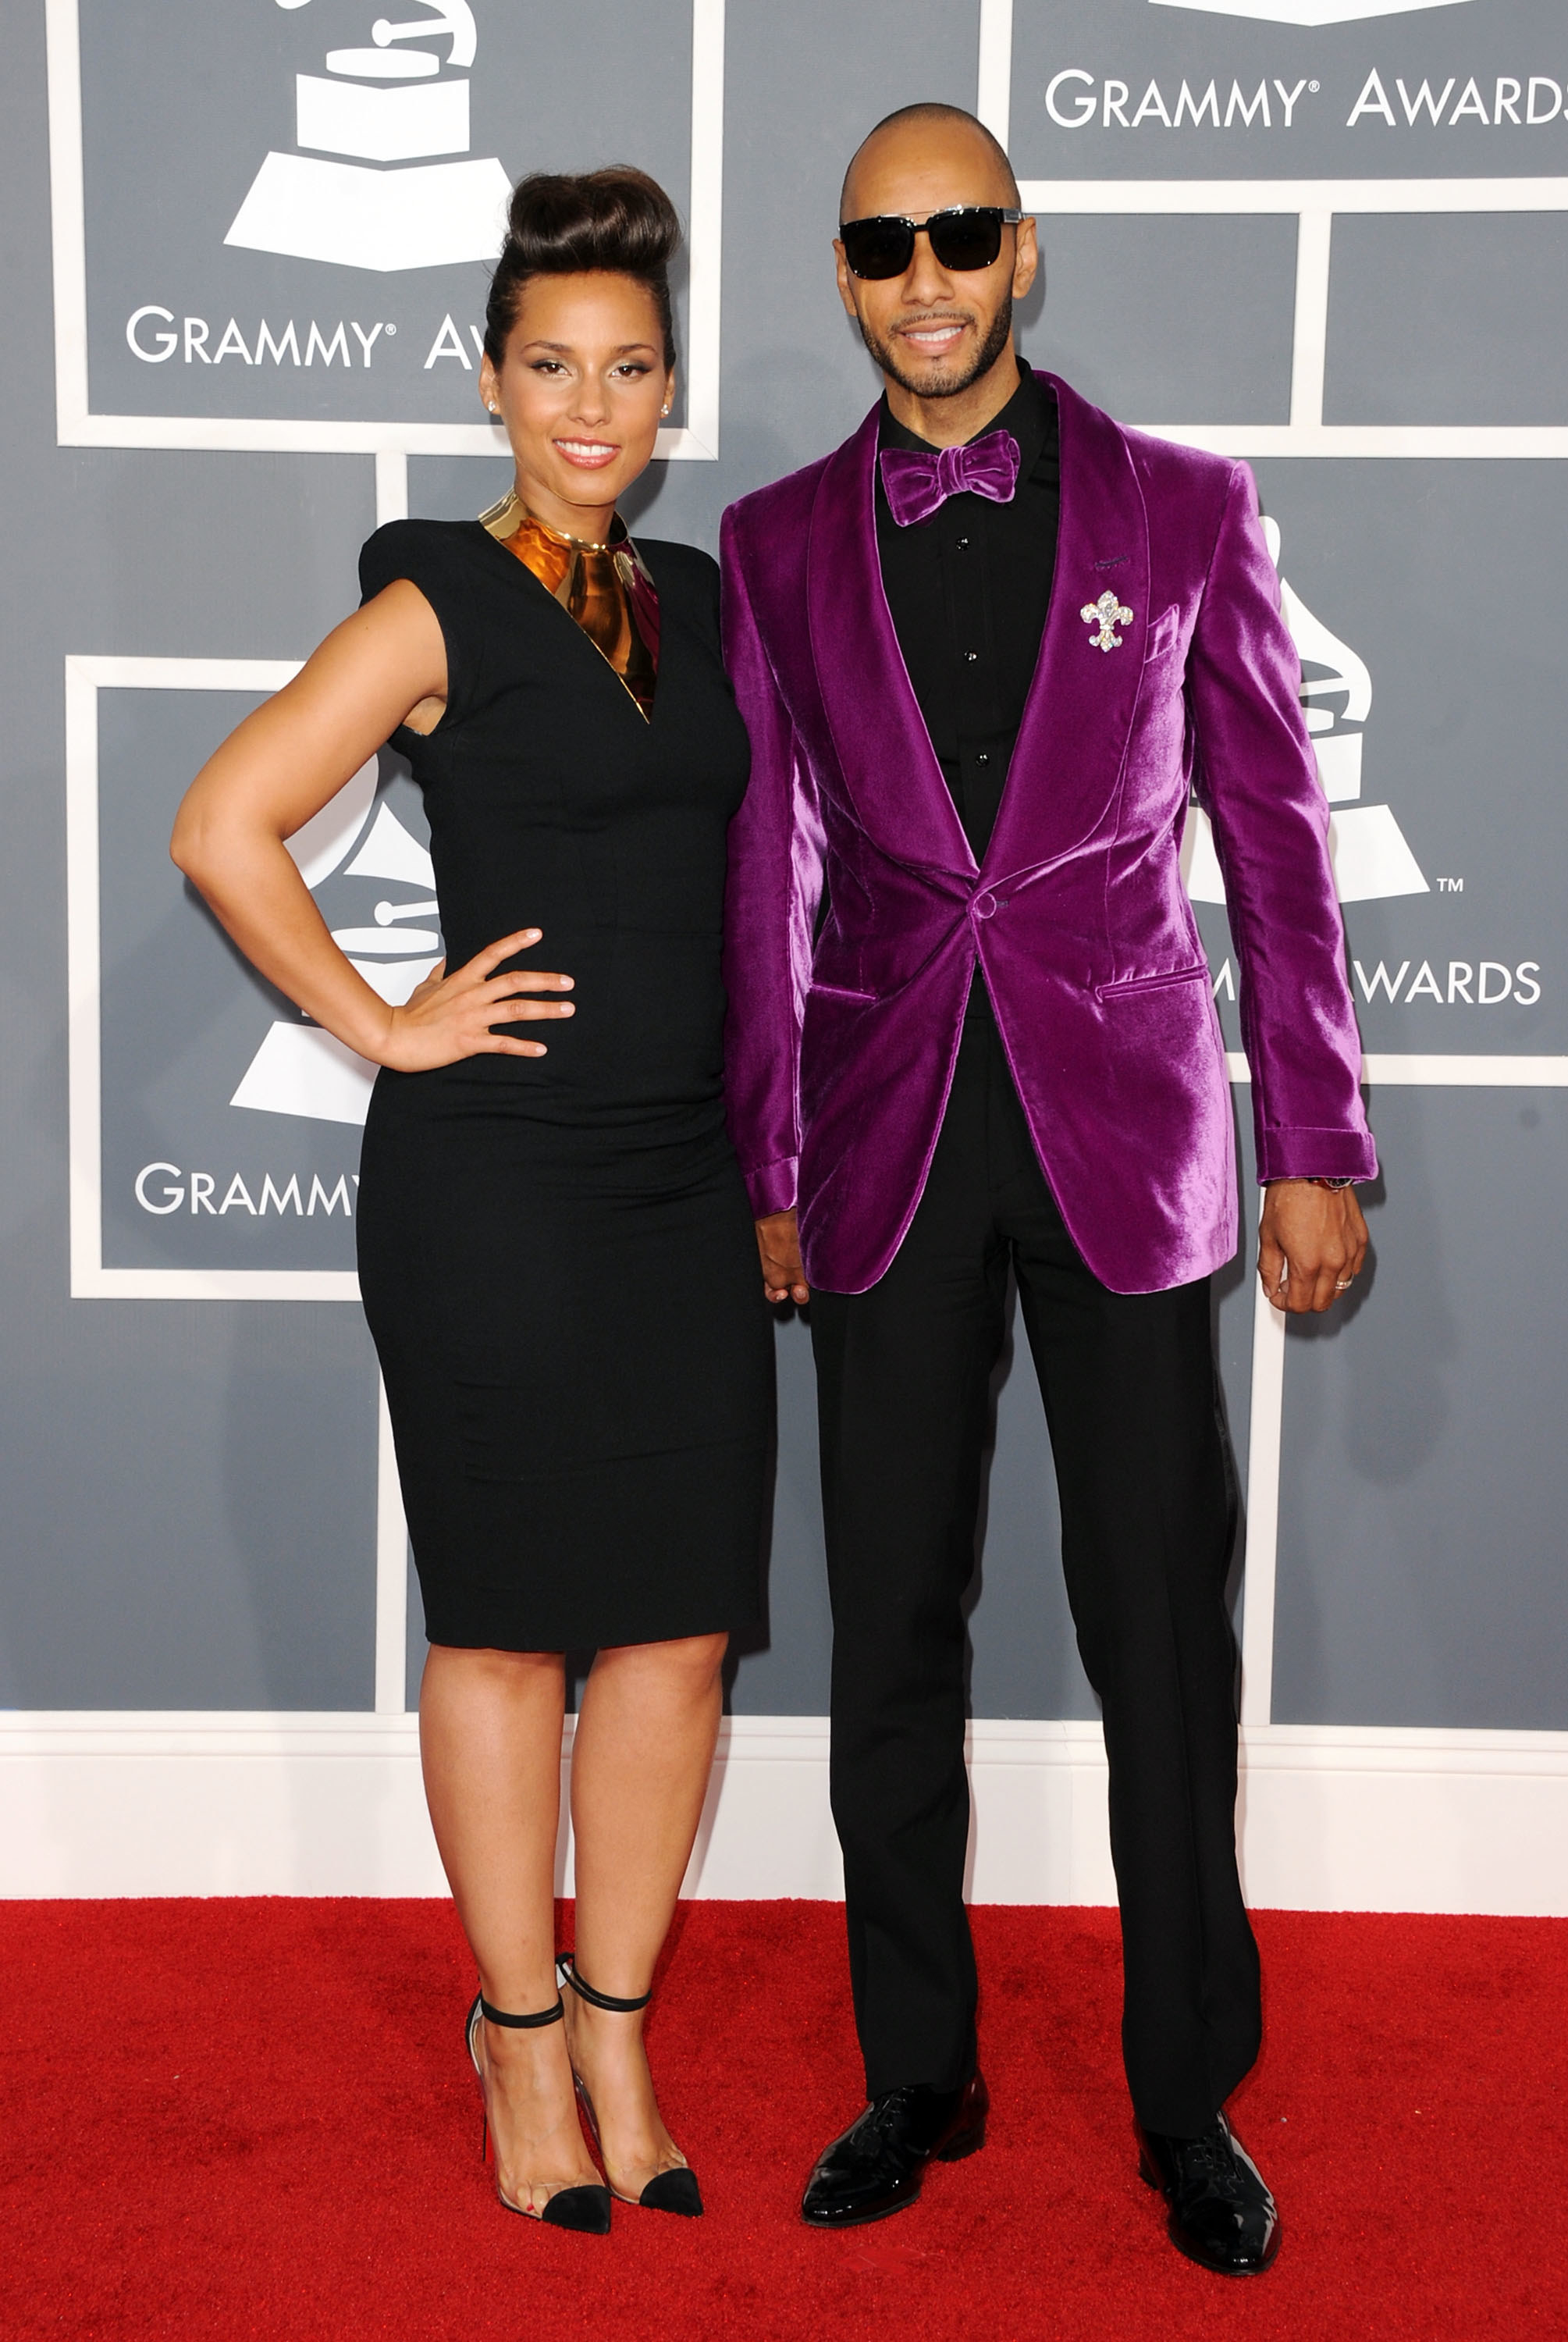 Alicia Keys and Swizz Beatz attend the Grammys on February 12, 2012